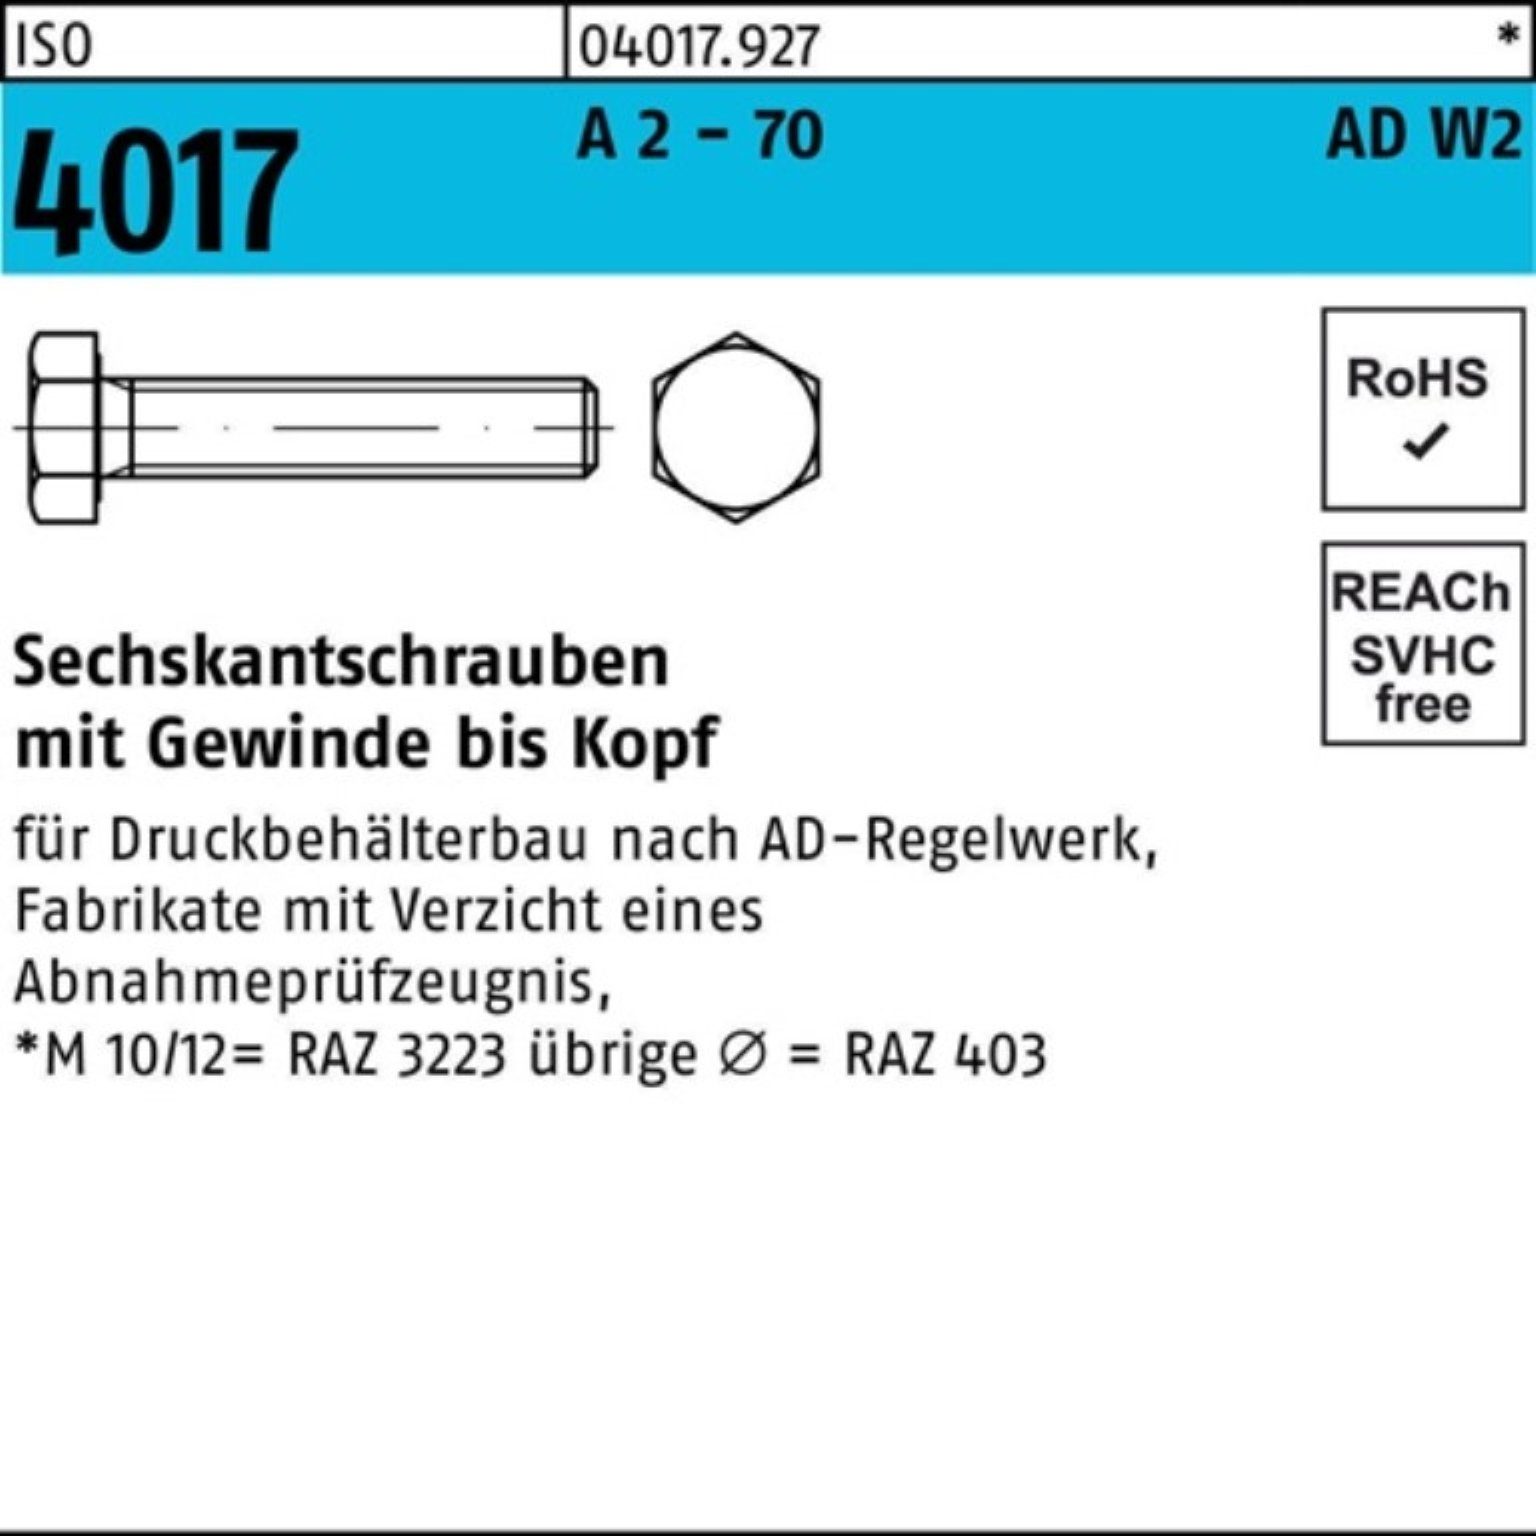 Bufab Sechskantschraube 100er Pack Sechskantschraube ISO 4017 VG M12x 50 A 2 - 70 AD-W2 50 St